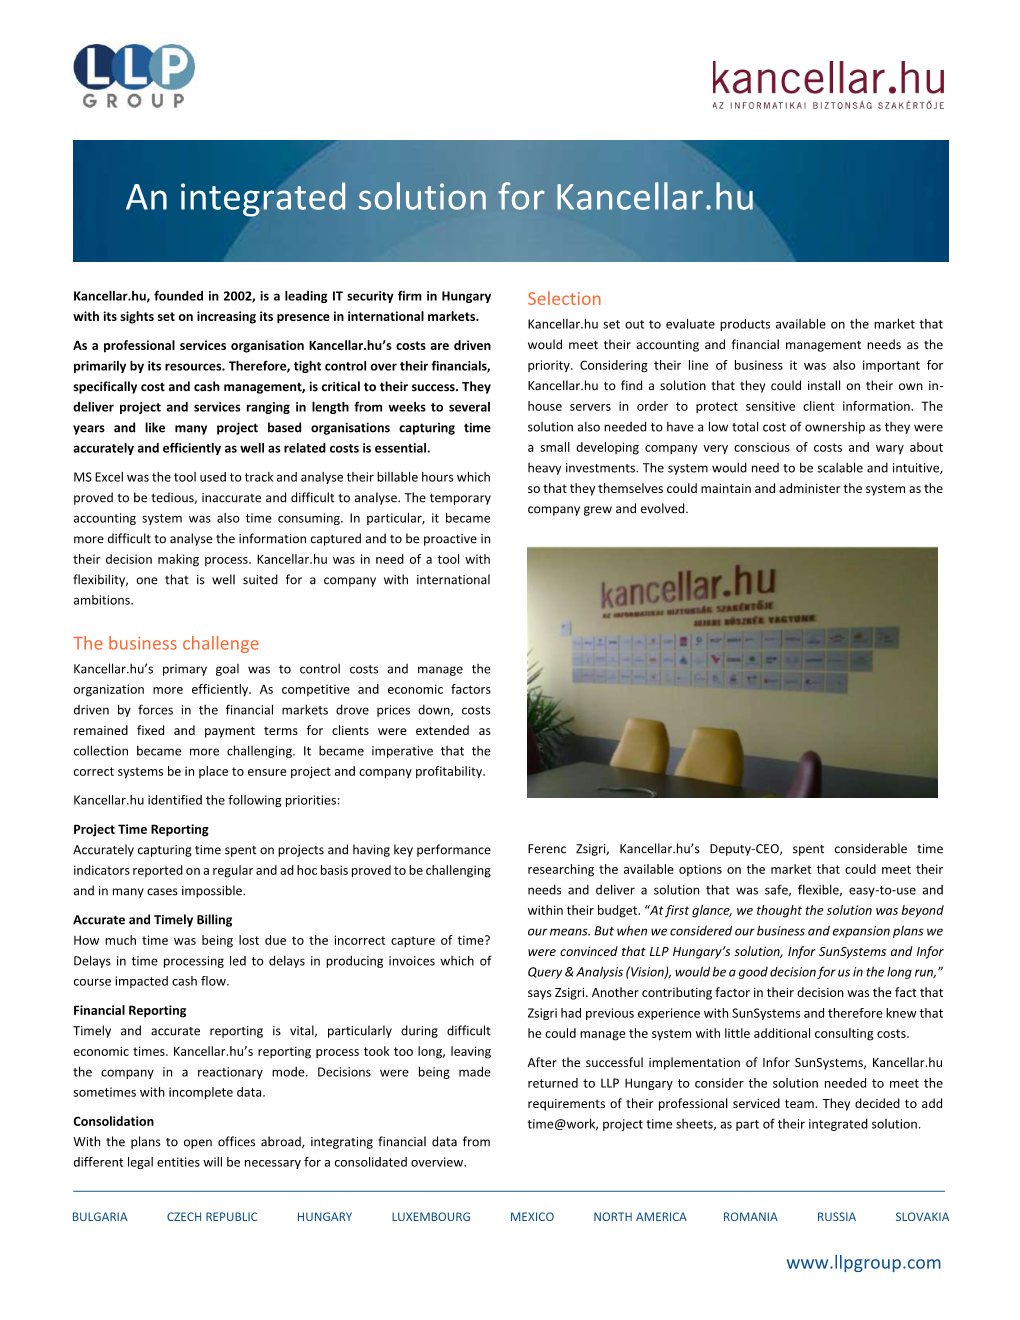 An Integrated Solution for Kancellar.Hu